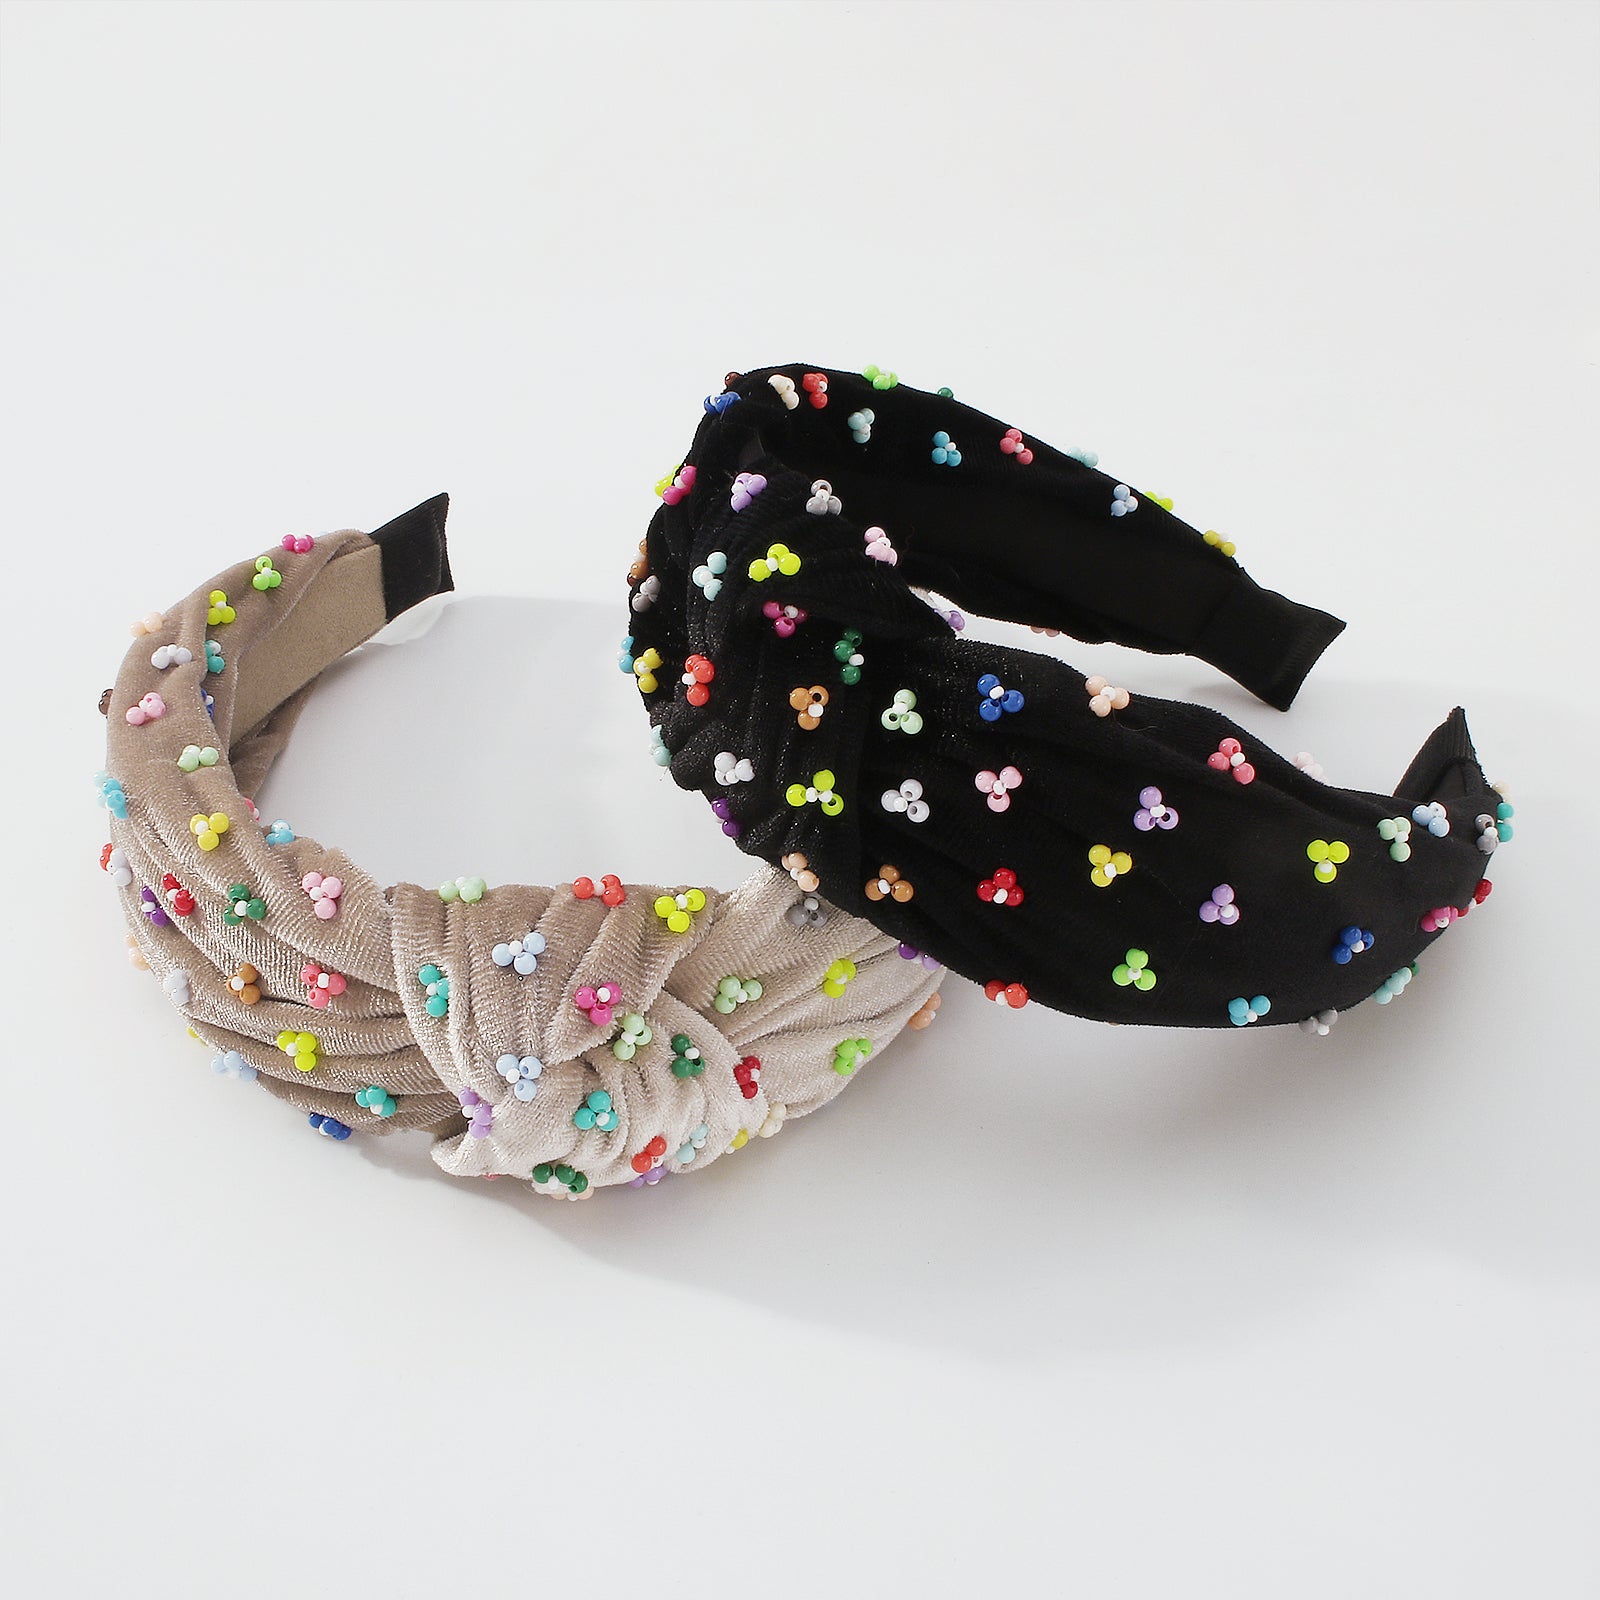 Handmade Colorful Beaded Solid Color Headband medyjewelry